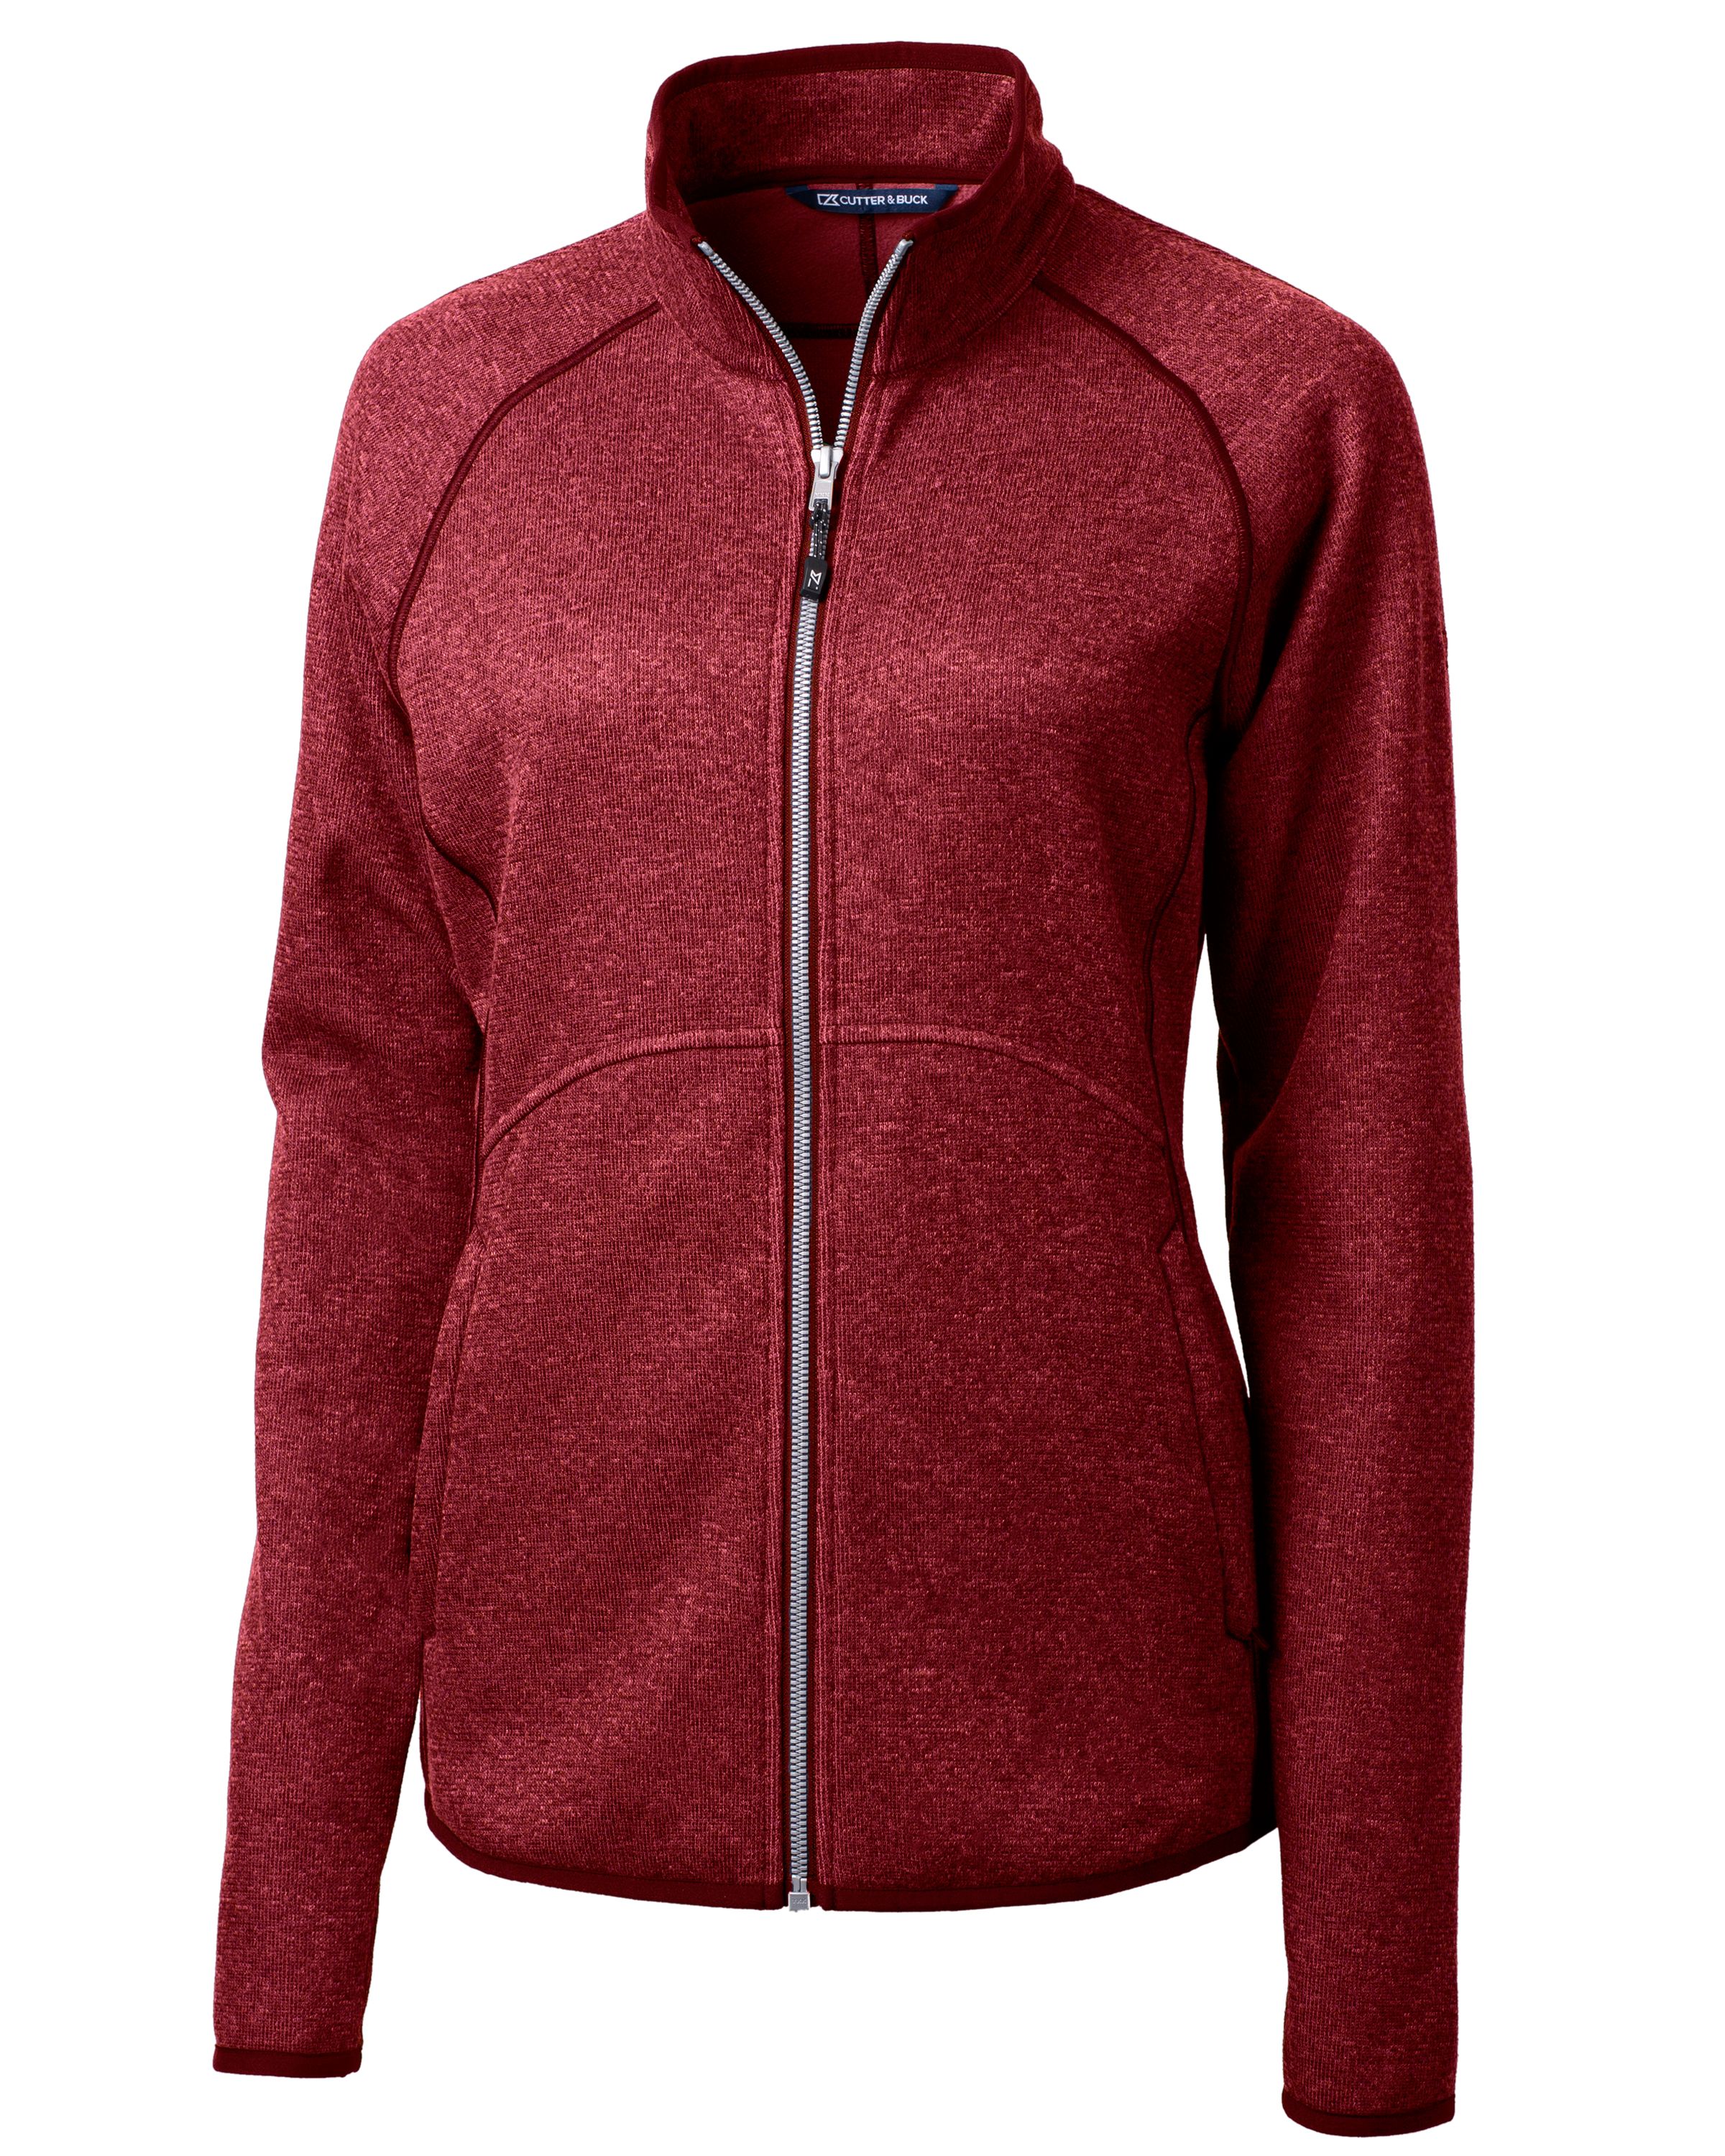 CUTTER & BUCK LCO00059 - Women's Mainsail Sweater-Knit Full Zip Jacket